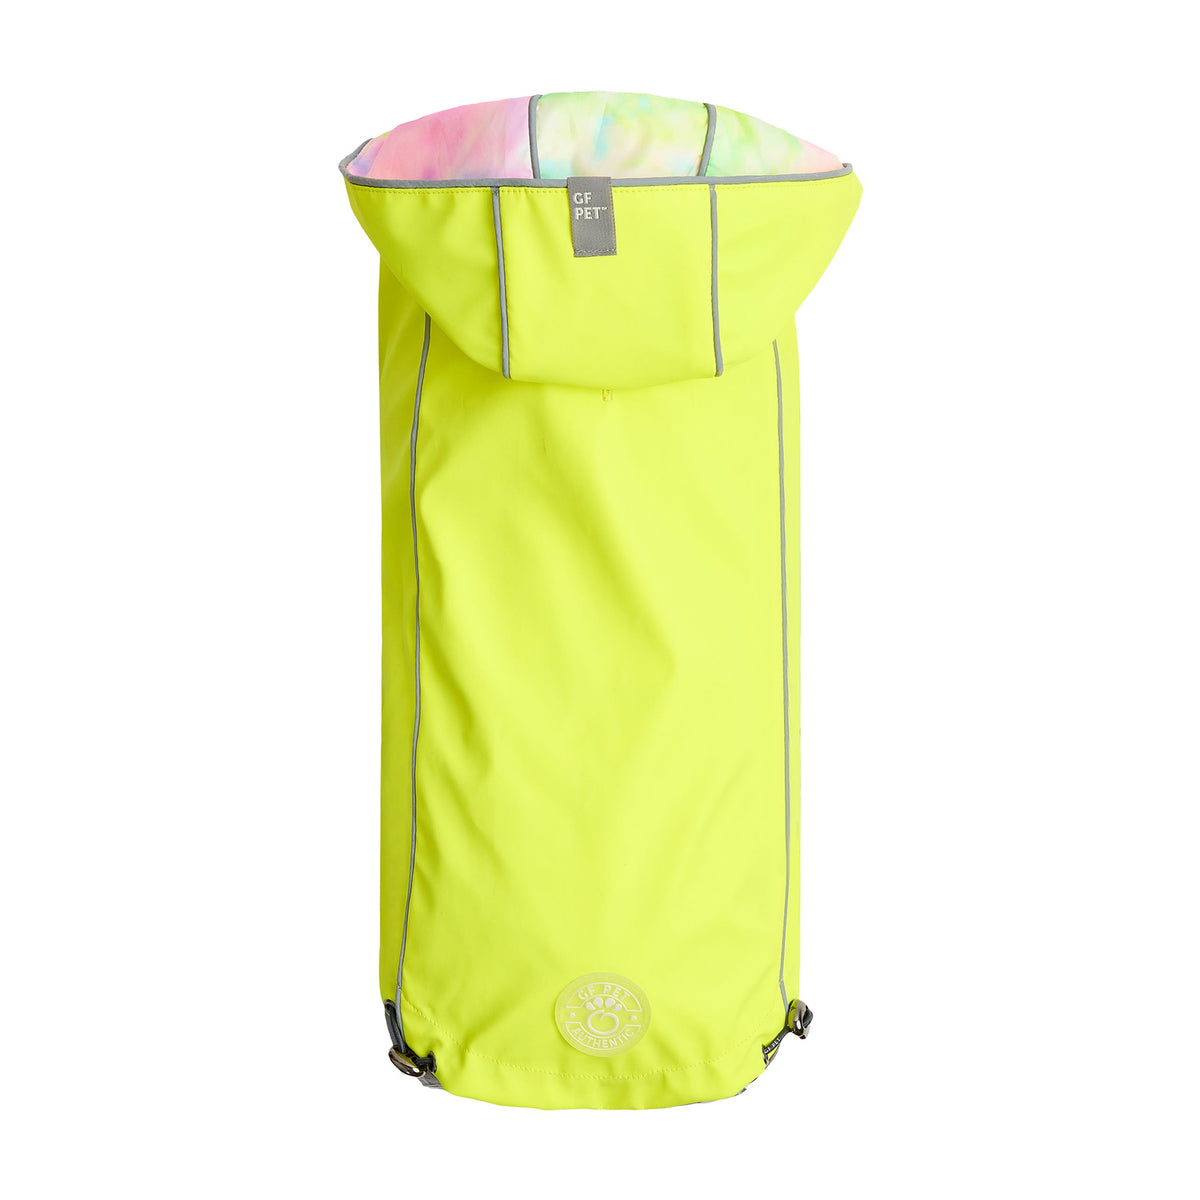 Reversible Raincoat - Neon Yellow with Tie Dye